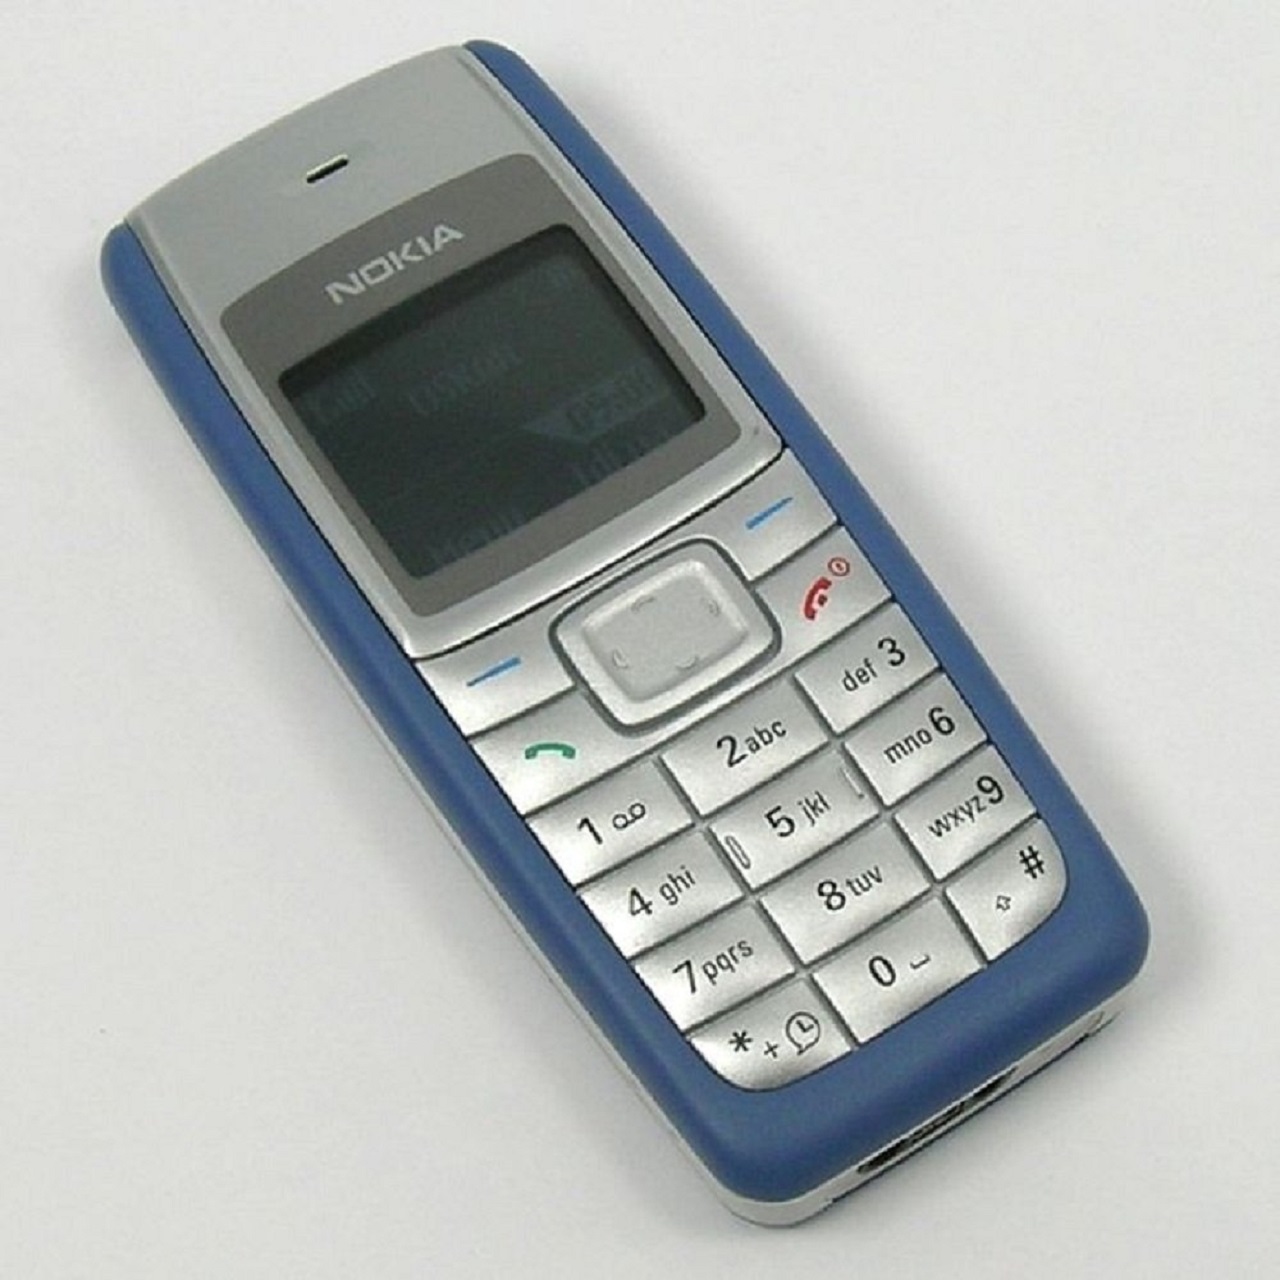 Фото старого нокиа. Nokia 1110. Nokia 1110i. Нокиа 1210. Nokia 1110i Red.